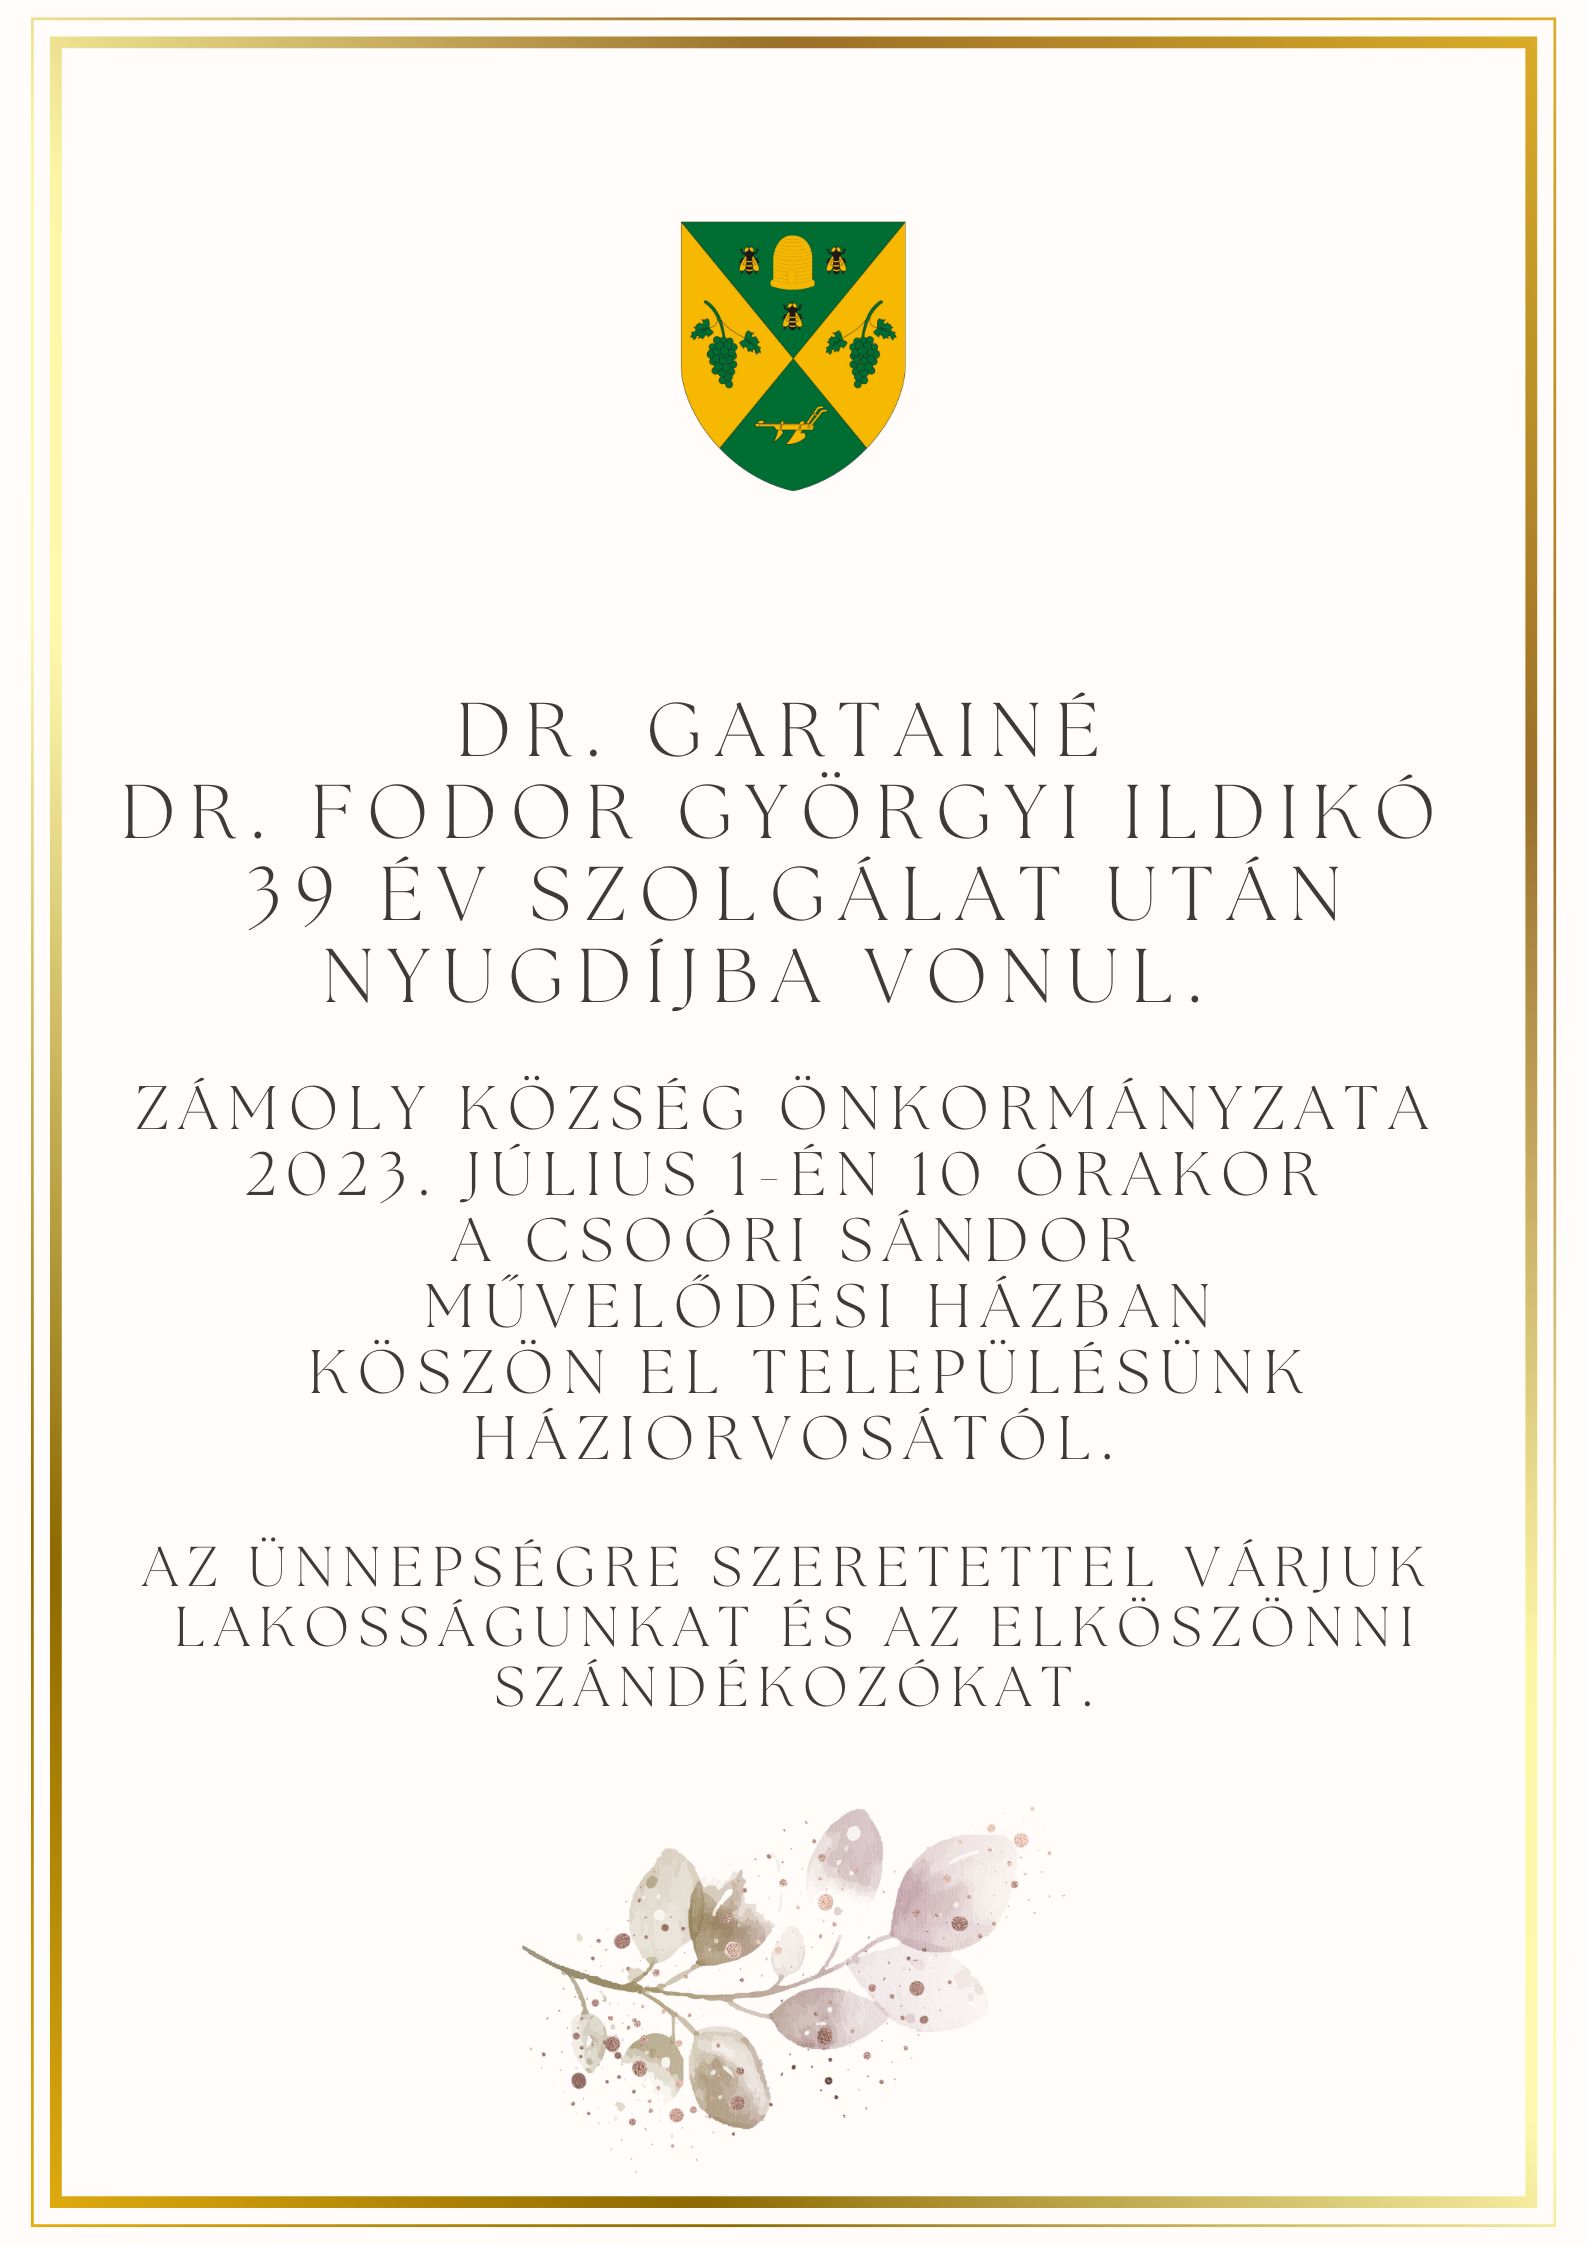 Dr. Gartainé dr. fodor Györgyi Ildikó köszöntése